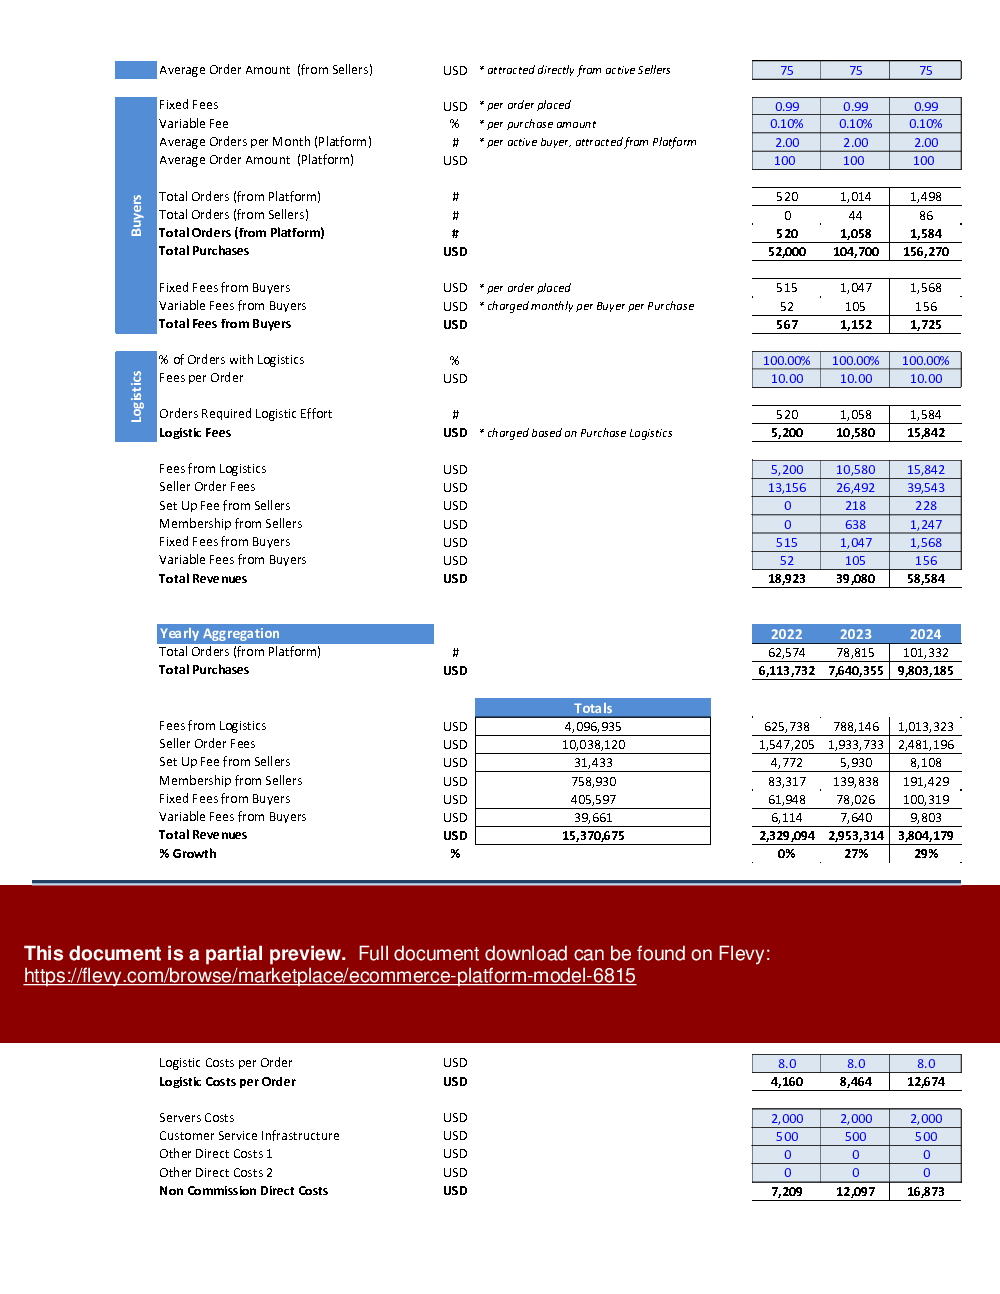 eCommerce Platform Model (Excel workbook (XLSX)) Preview Image